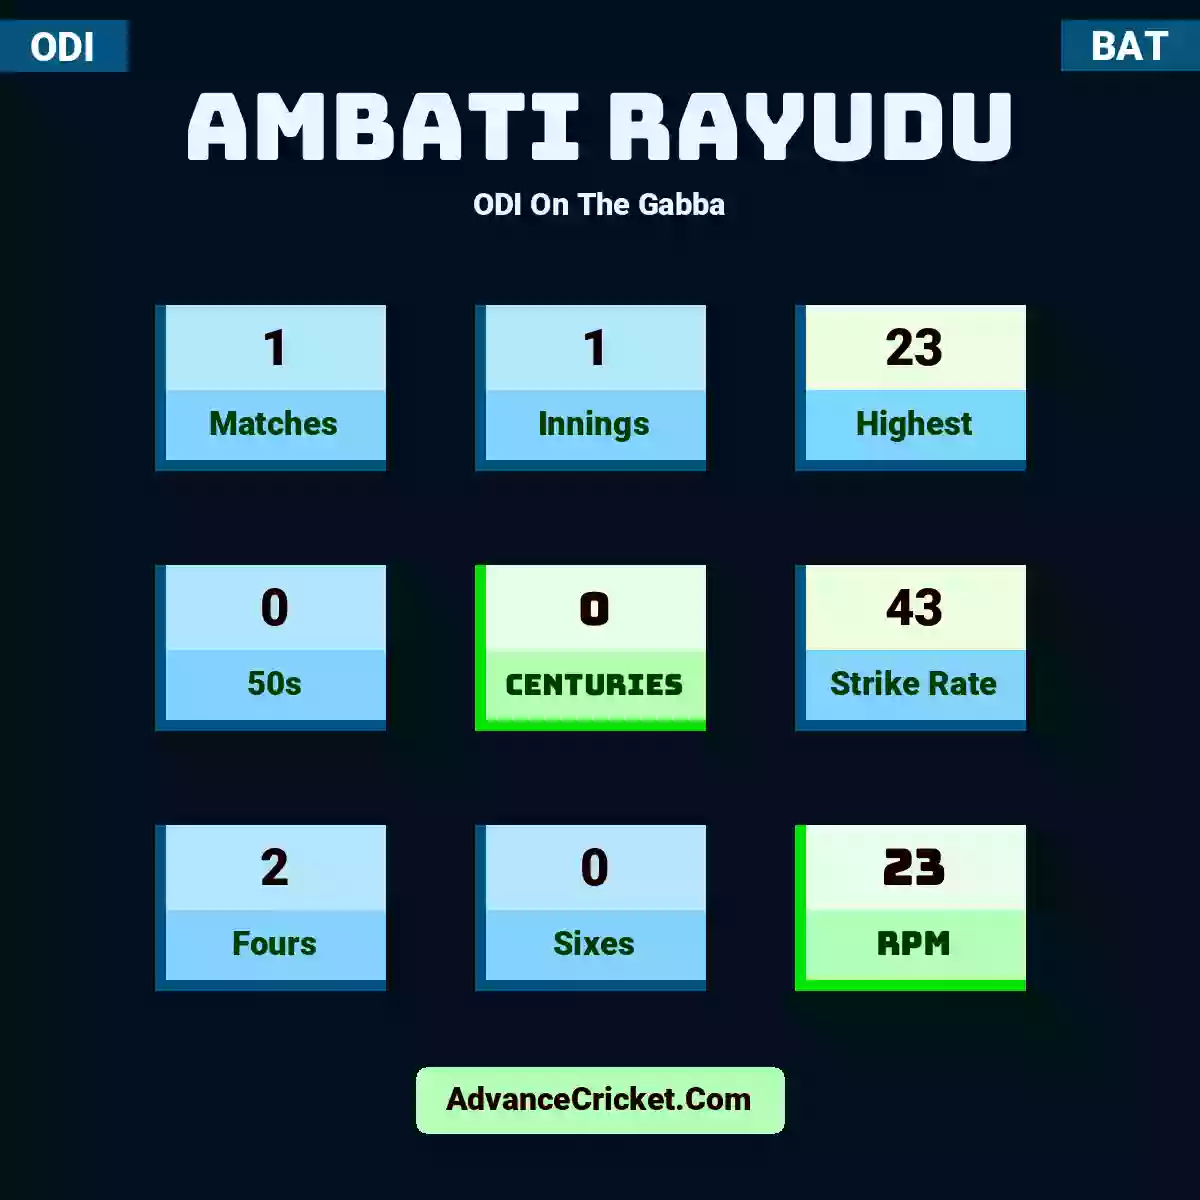 Ambati Rayudu ODI  On The Gabba, Ambati Rayudu played 1 matches, scored 23 runs as highest, 0 half-centuries, and 0 centuries, with a strike rate of 43. A.Rayudu hit 2 fours and 0 sixes, with an RPM of 23.